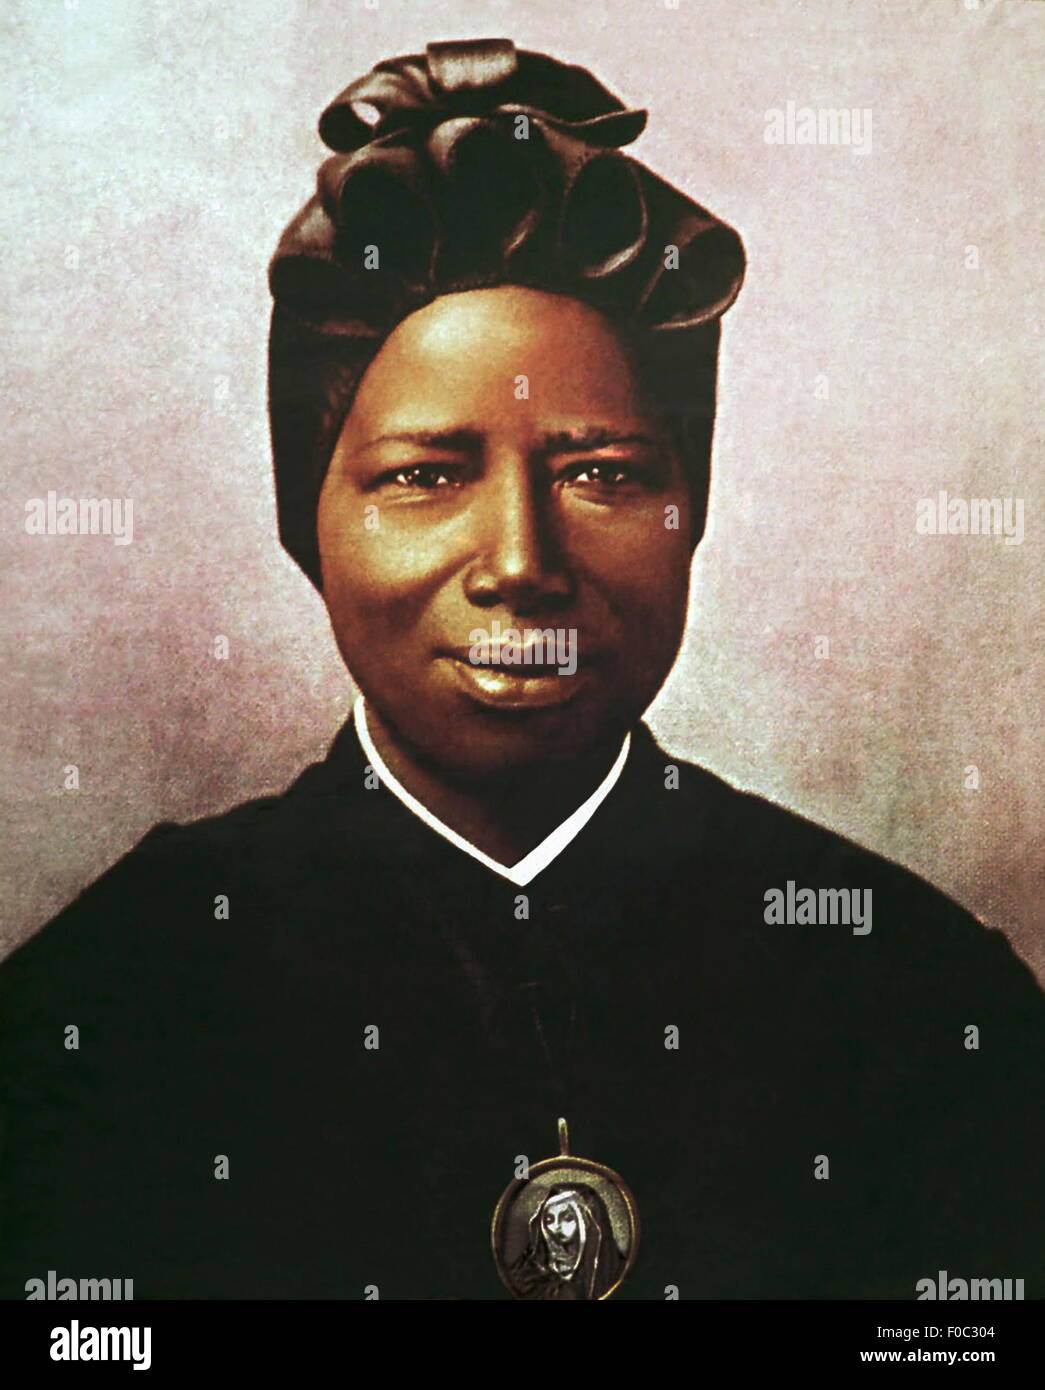 Bakhita, Josephine, 1869 - 8.2.1947, Sudanian saint and nun, portrait, painting after photograph, circa 1933, Stock Photo